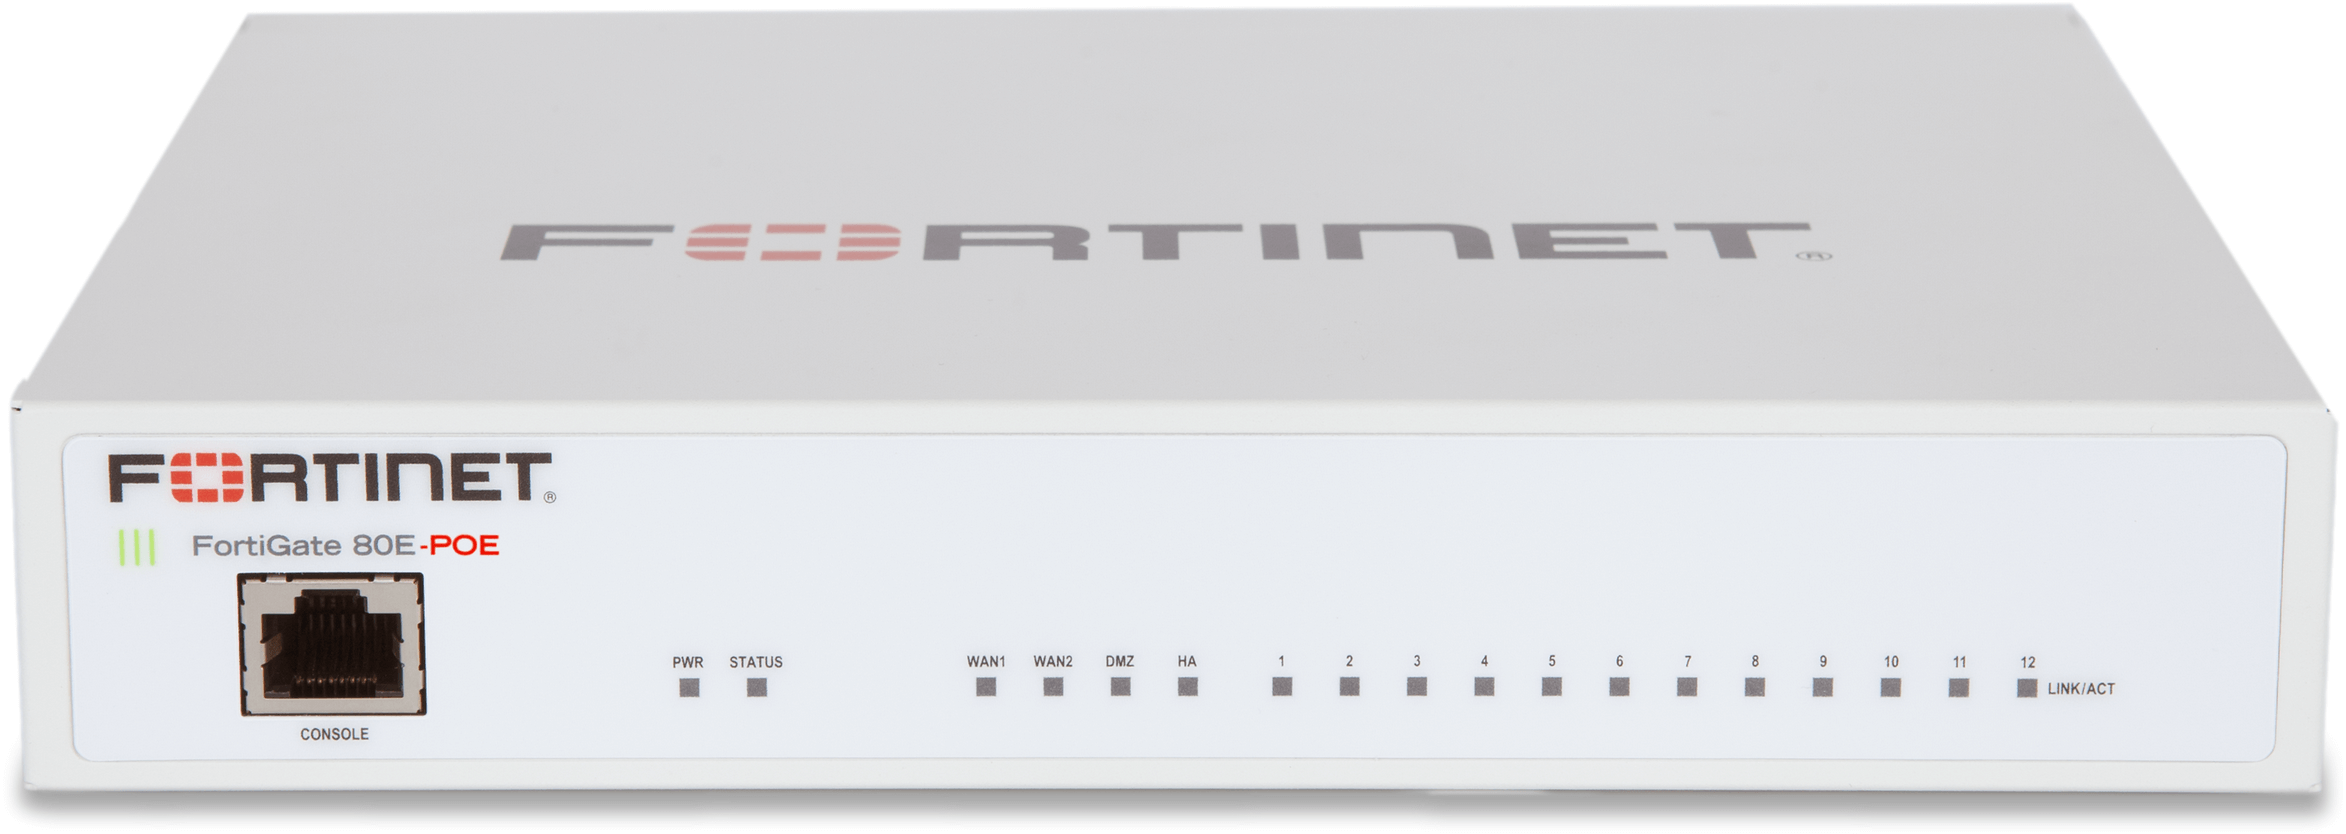 Fortinet FortiGate 80E POE Firewall